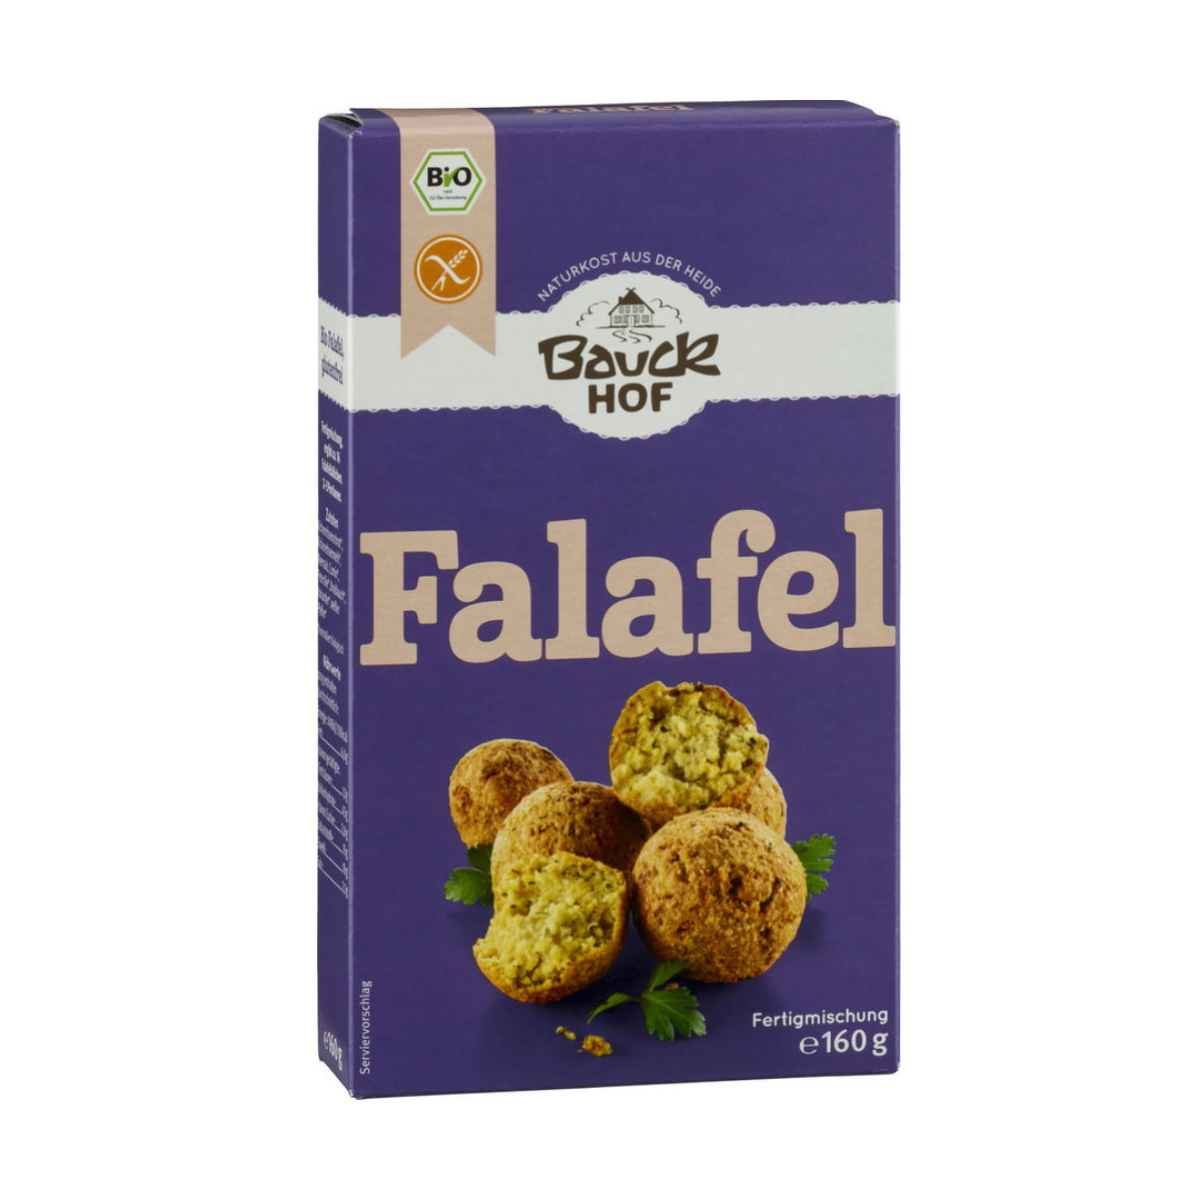 Bio Falafel Bauck glutenfrei